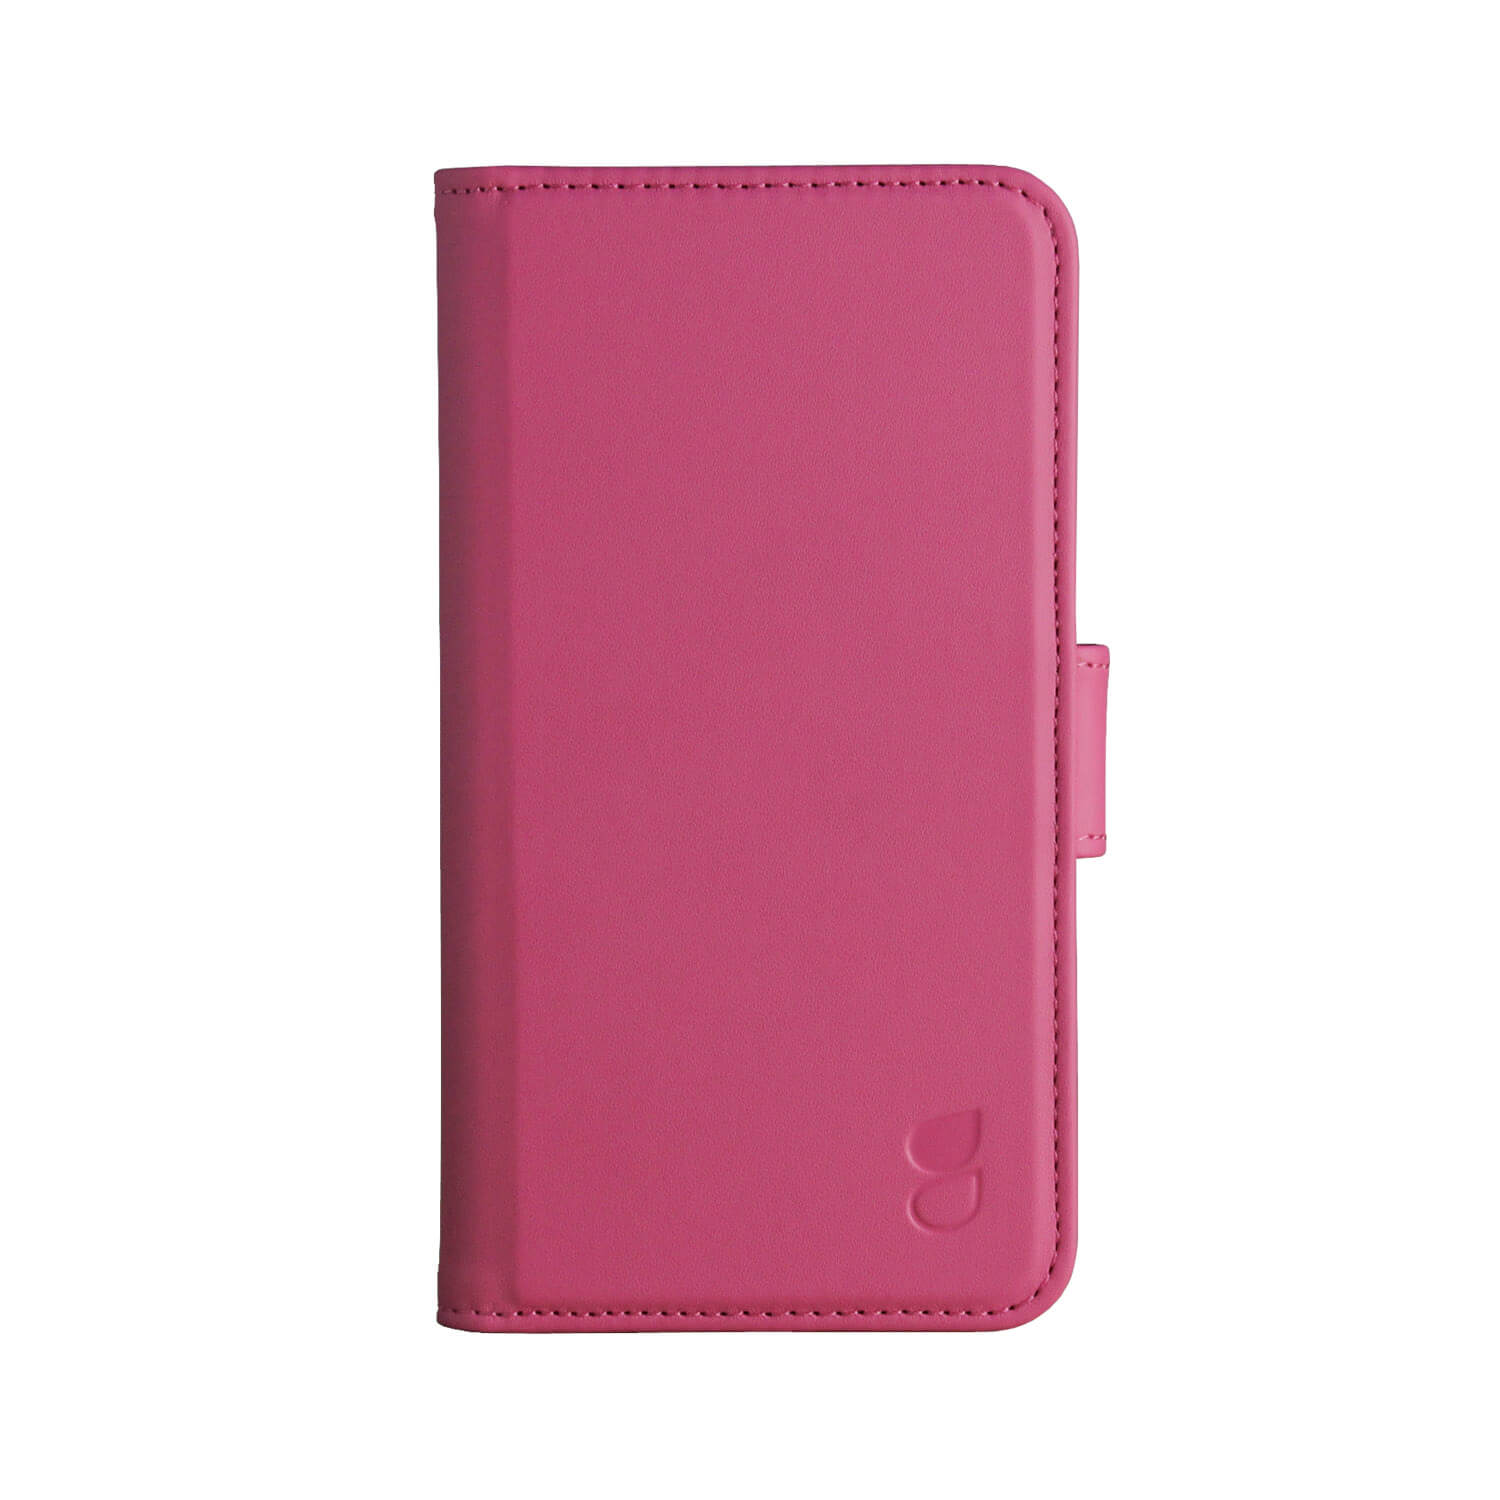 Wallet Case Pink - iPhone 6/7/8 Plus 